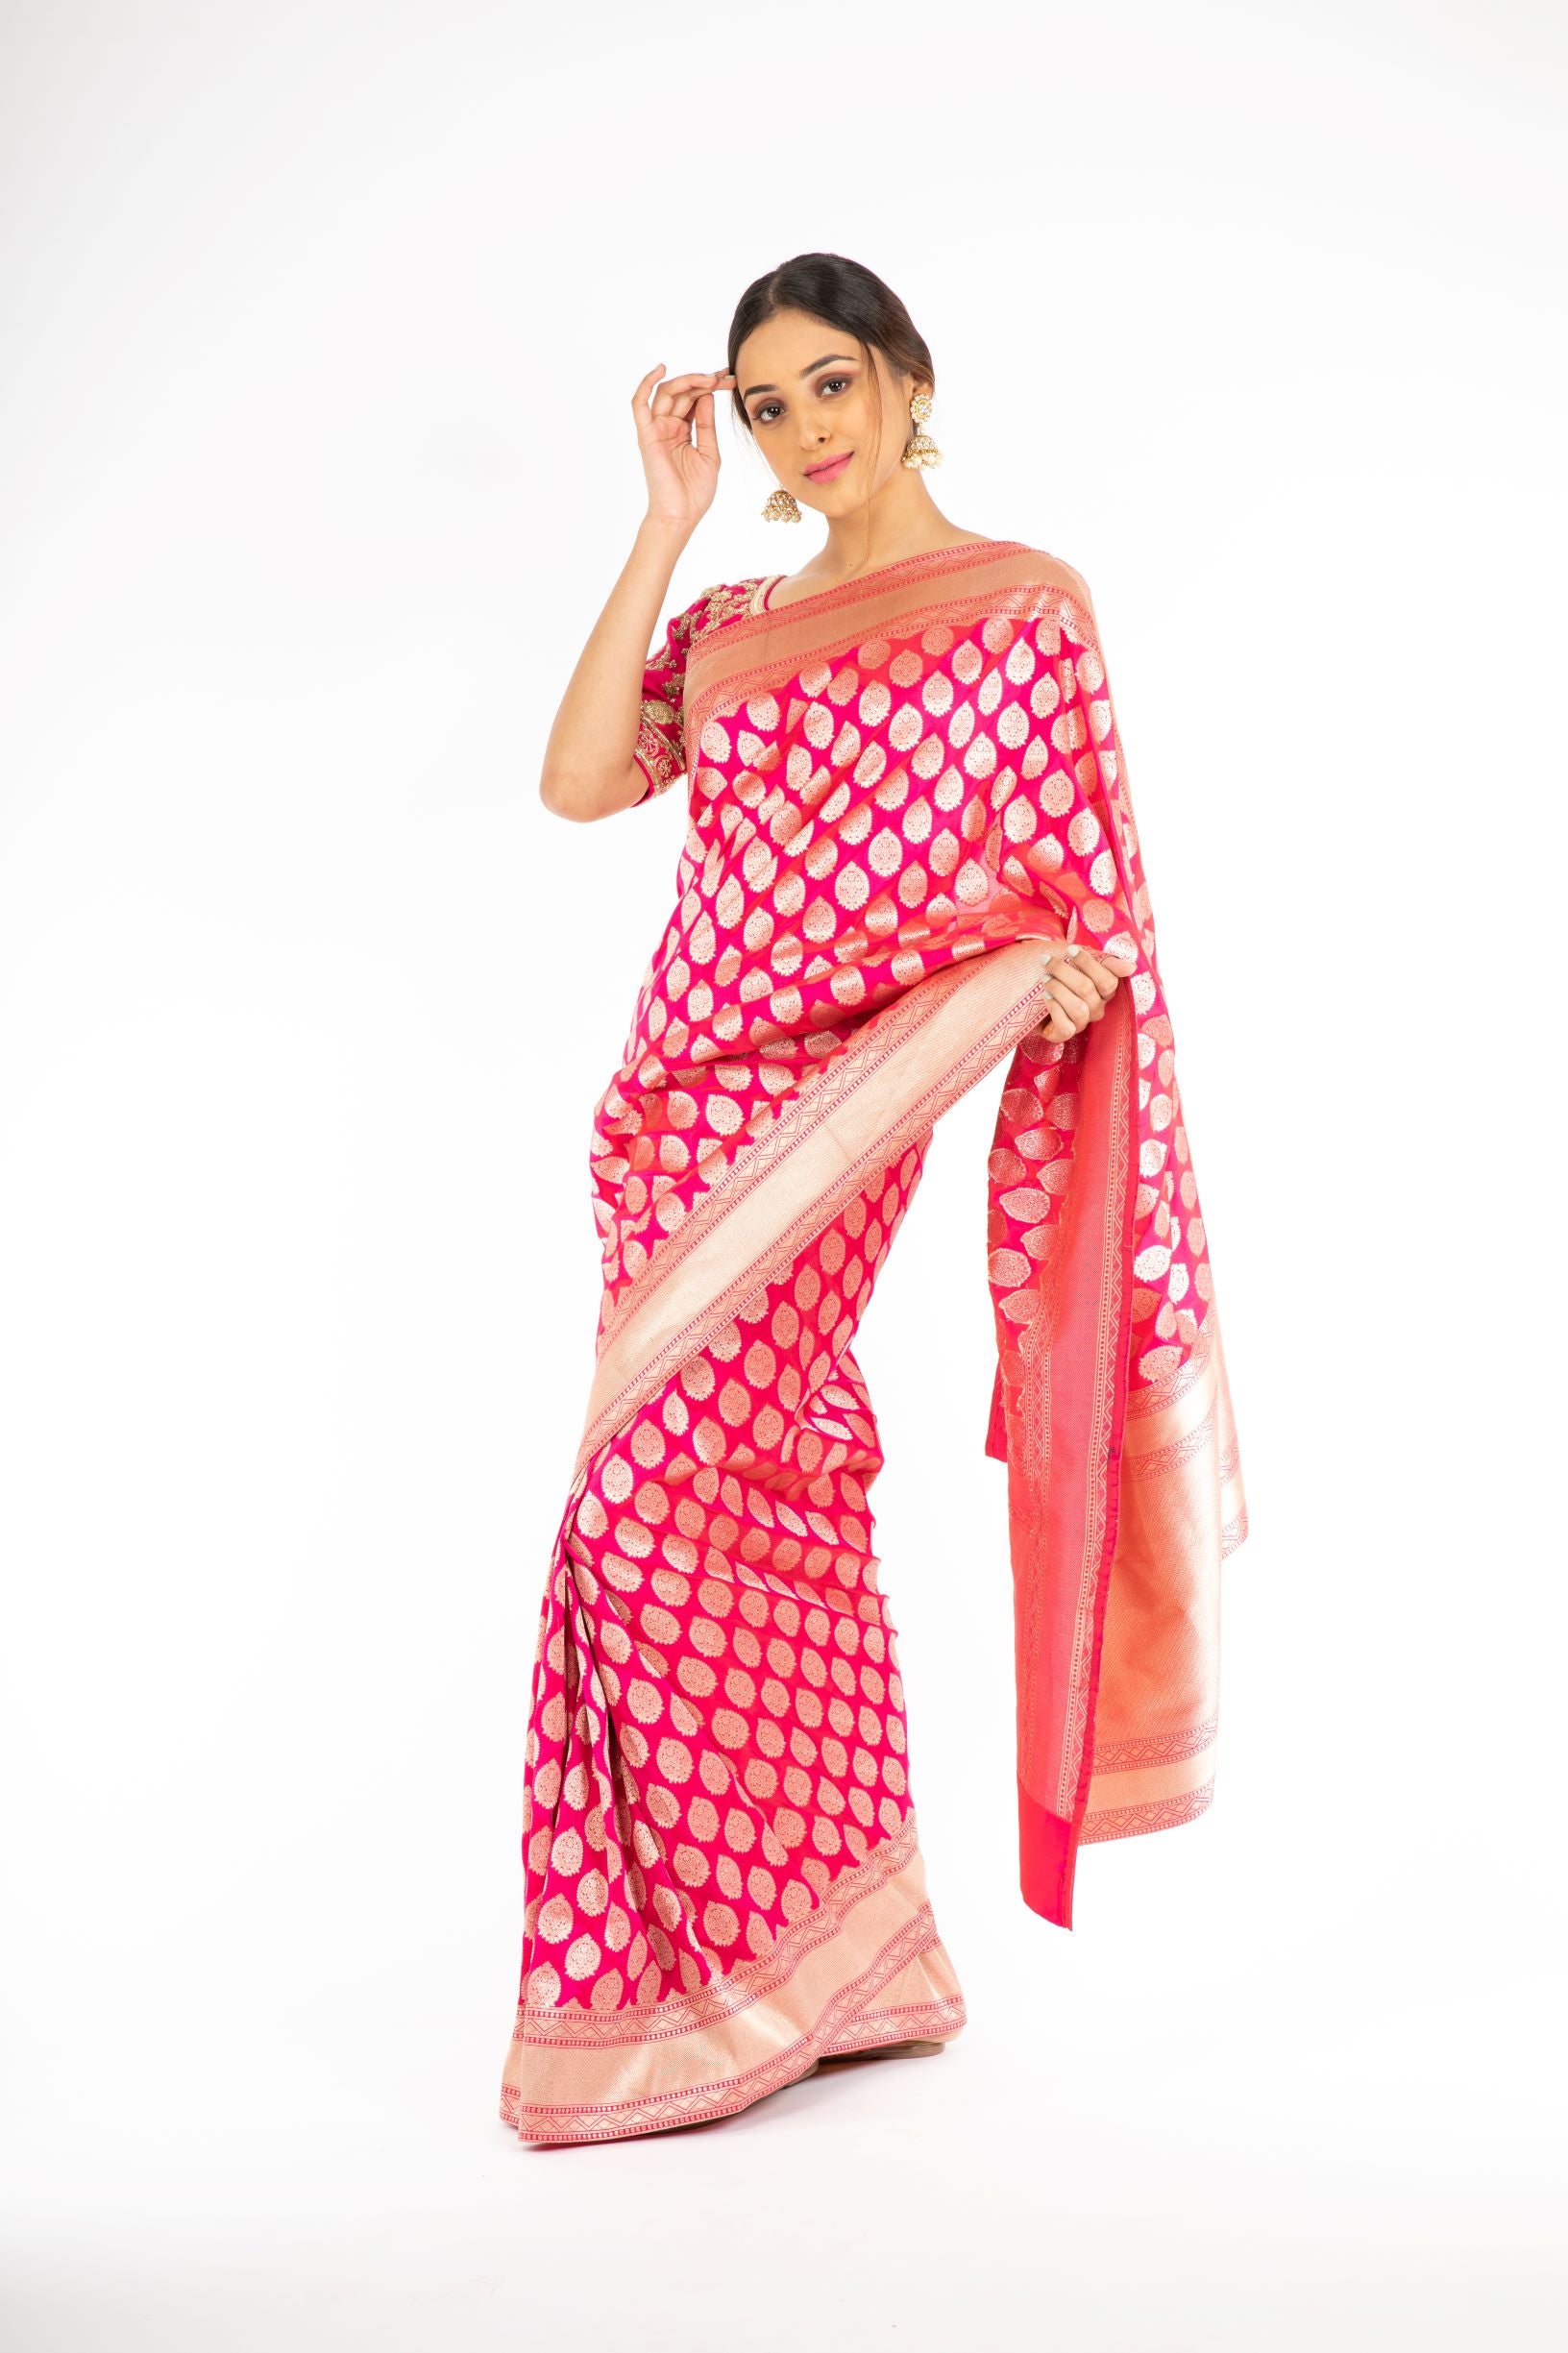 Extra-ordinary Pink Color Banarasi Handloom Saree from Panache Haute Couture